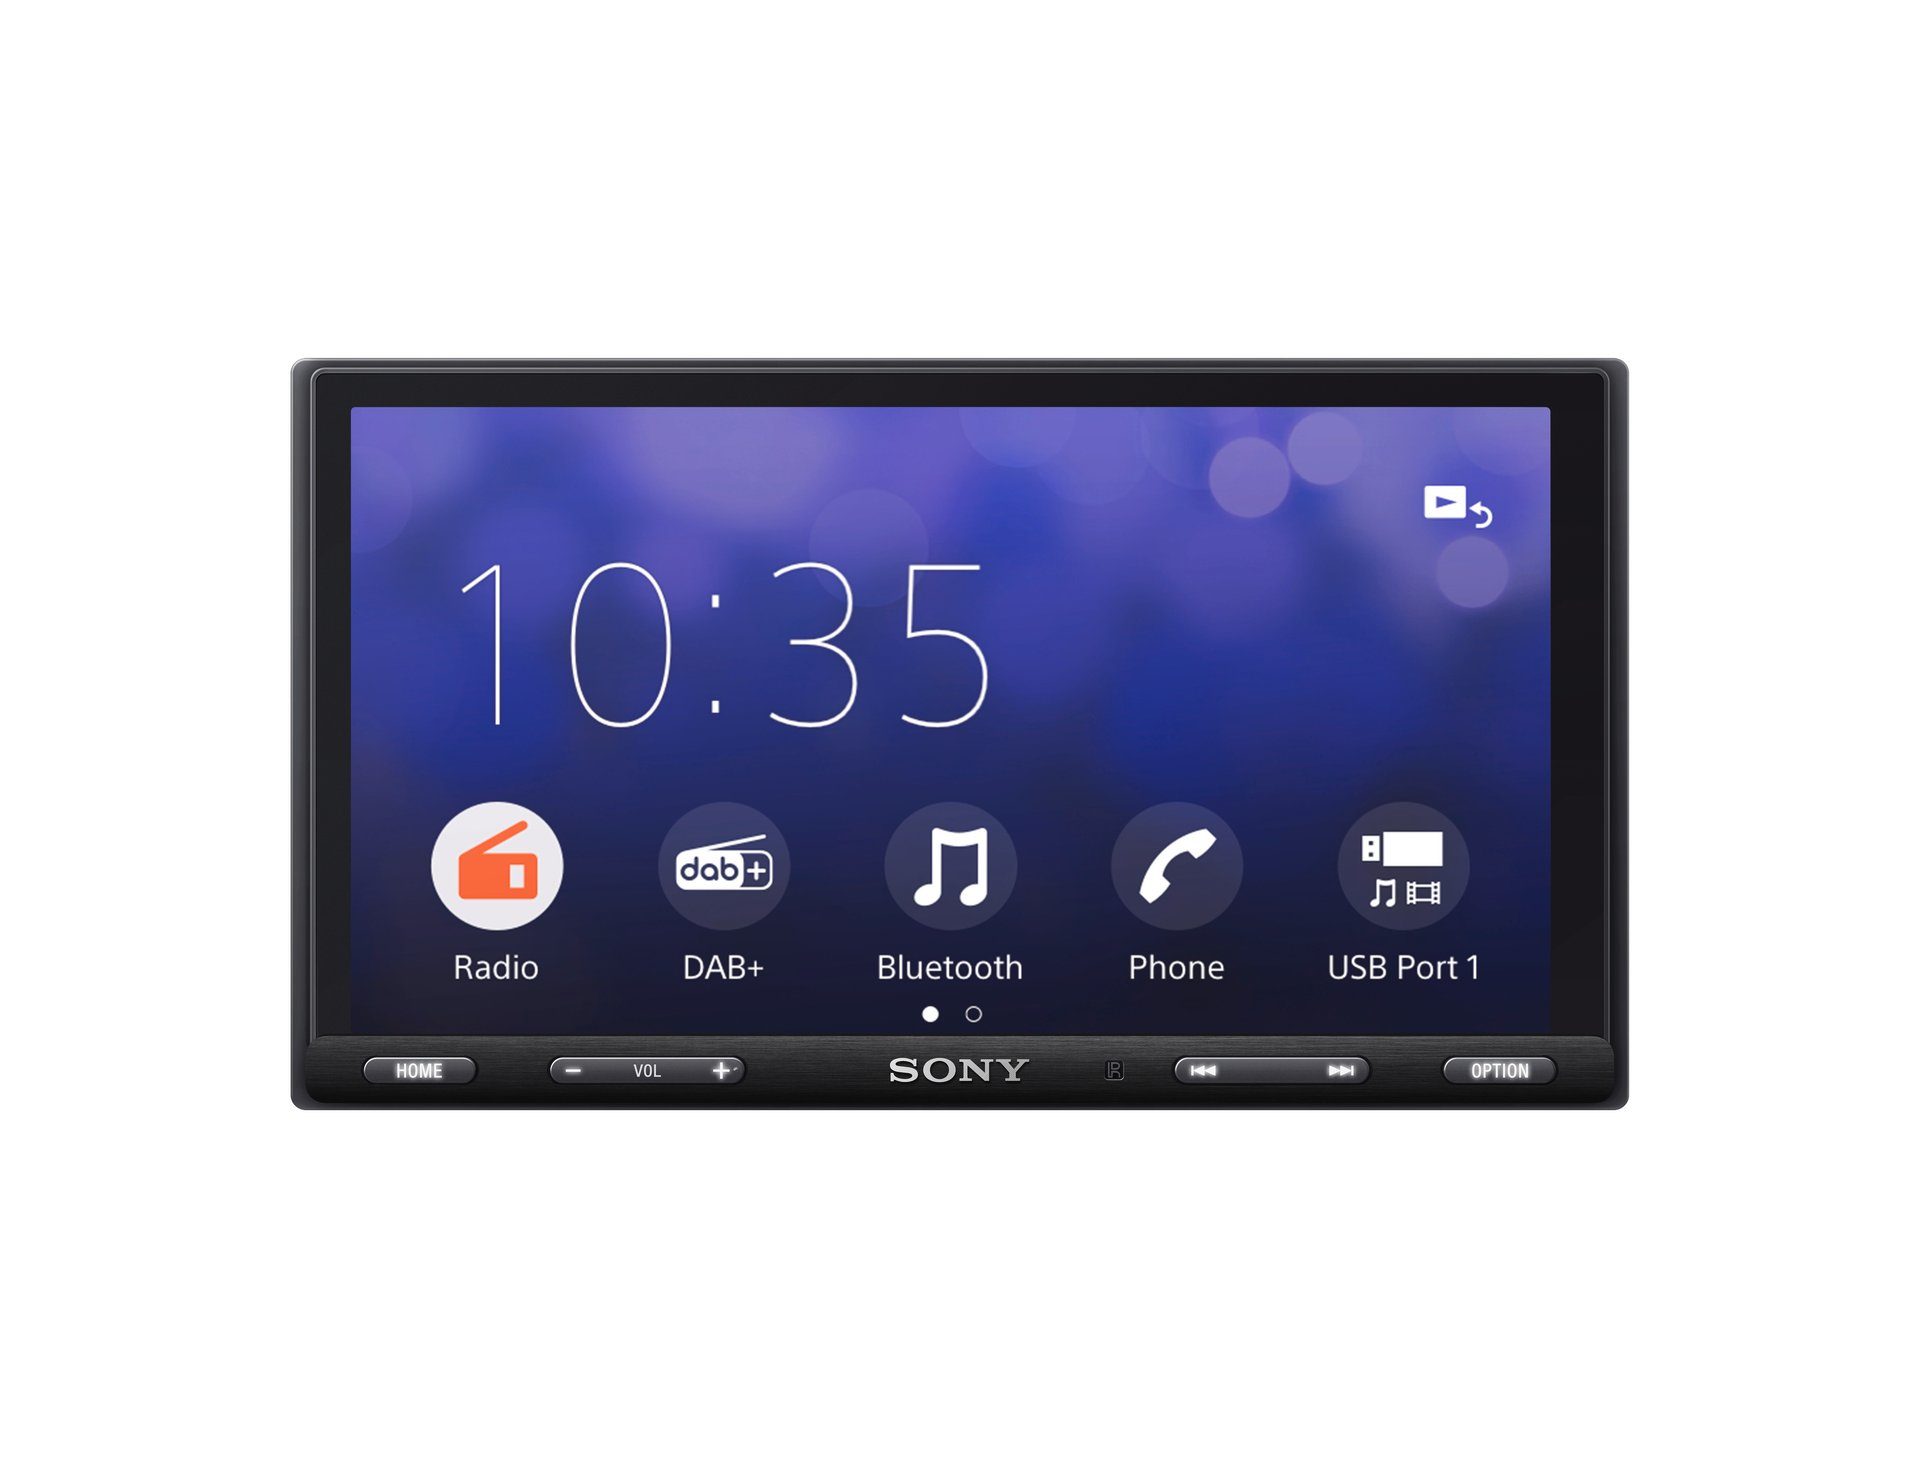 Sony XAV-AX5650 Autoradio met scherm Android Auto, Apple CarPlay, DAB+ tuner, Bluetooth handsfree, I